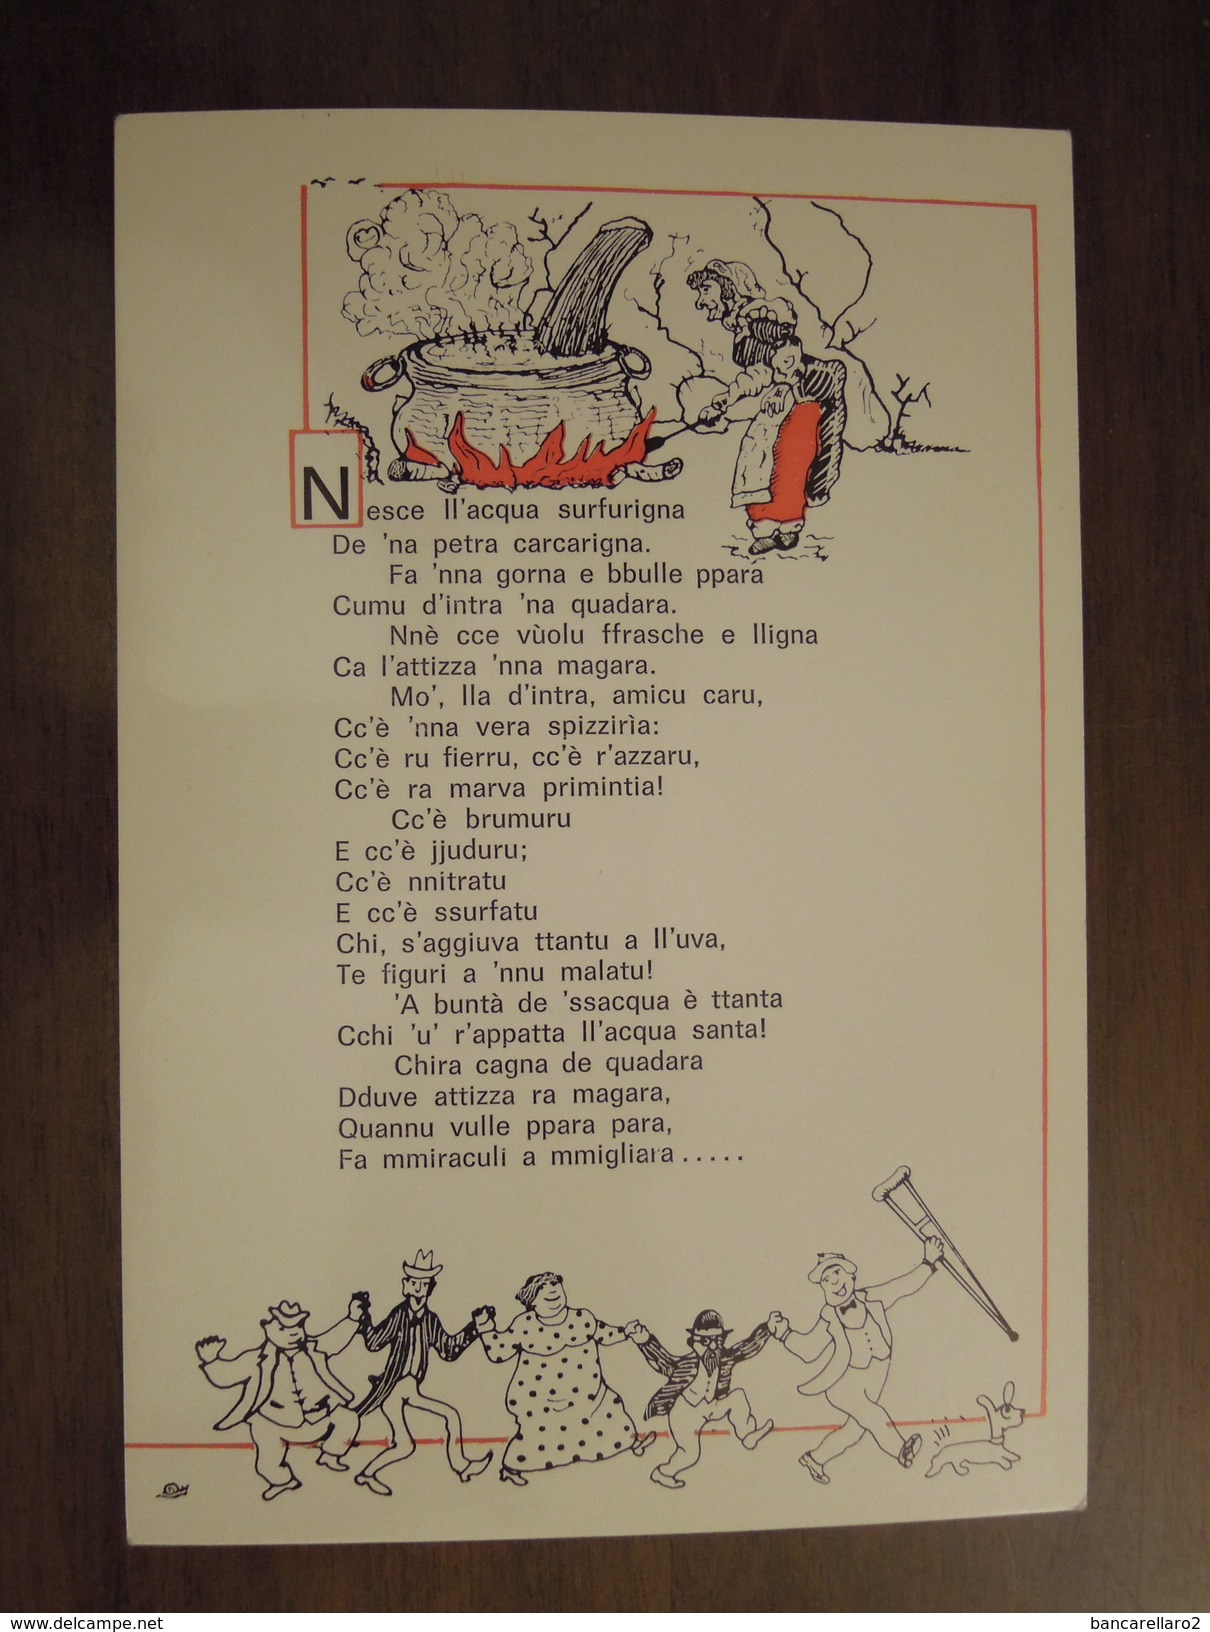 TERME CARONTE   LAMEZIA TERME (CZ)   -  Cartolina Anno 1972 - Lamezia Terme